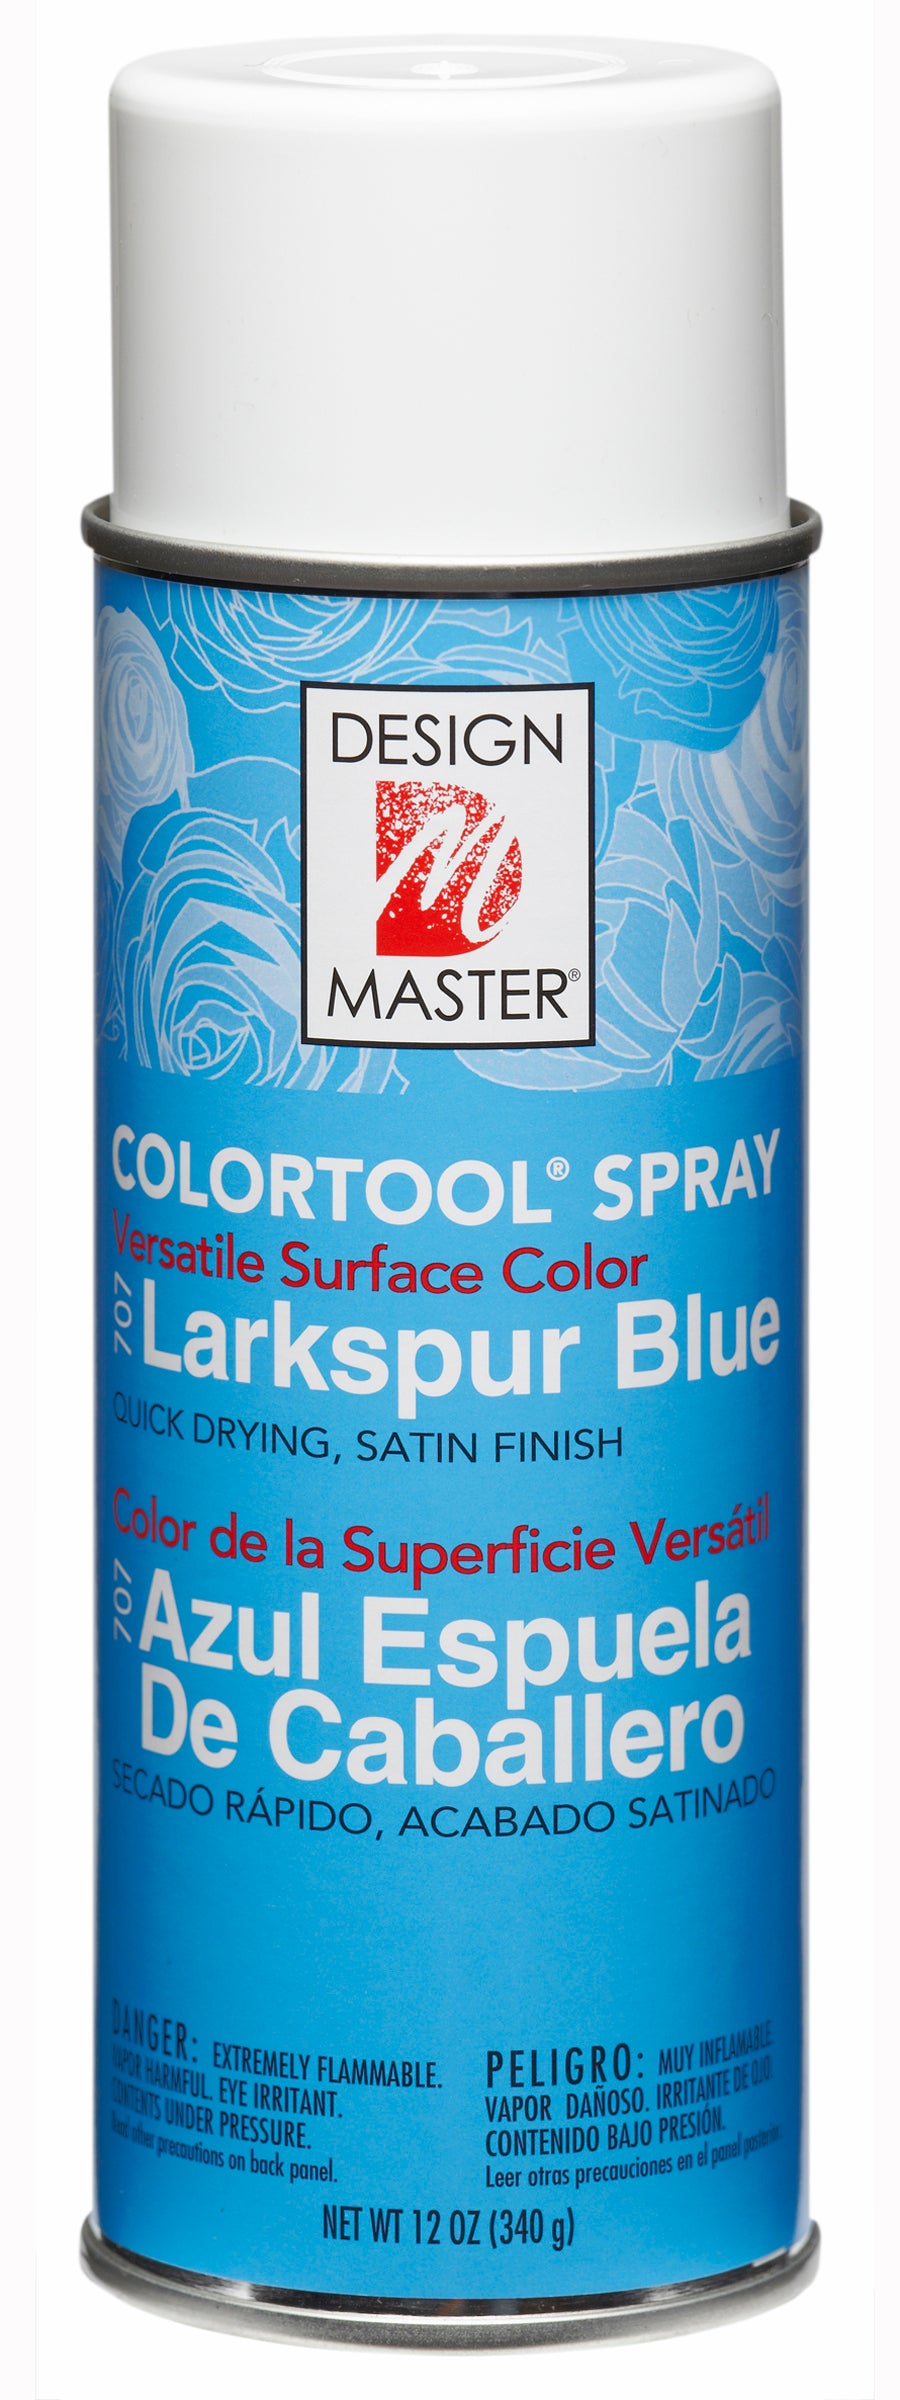 Design Master Colortool Spray-Larkspur Blue